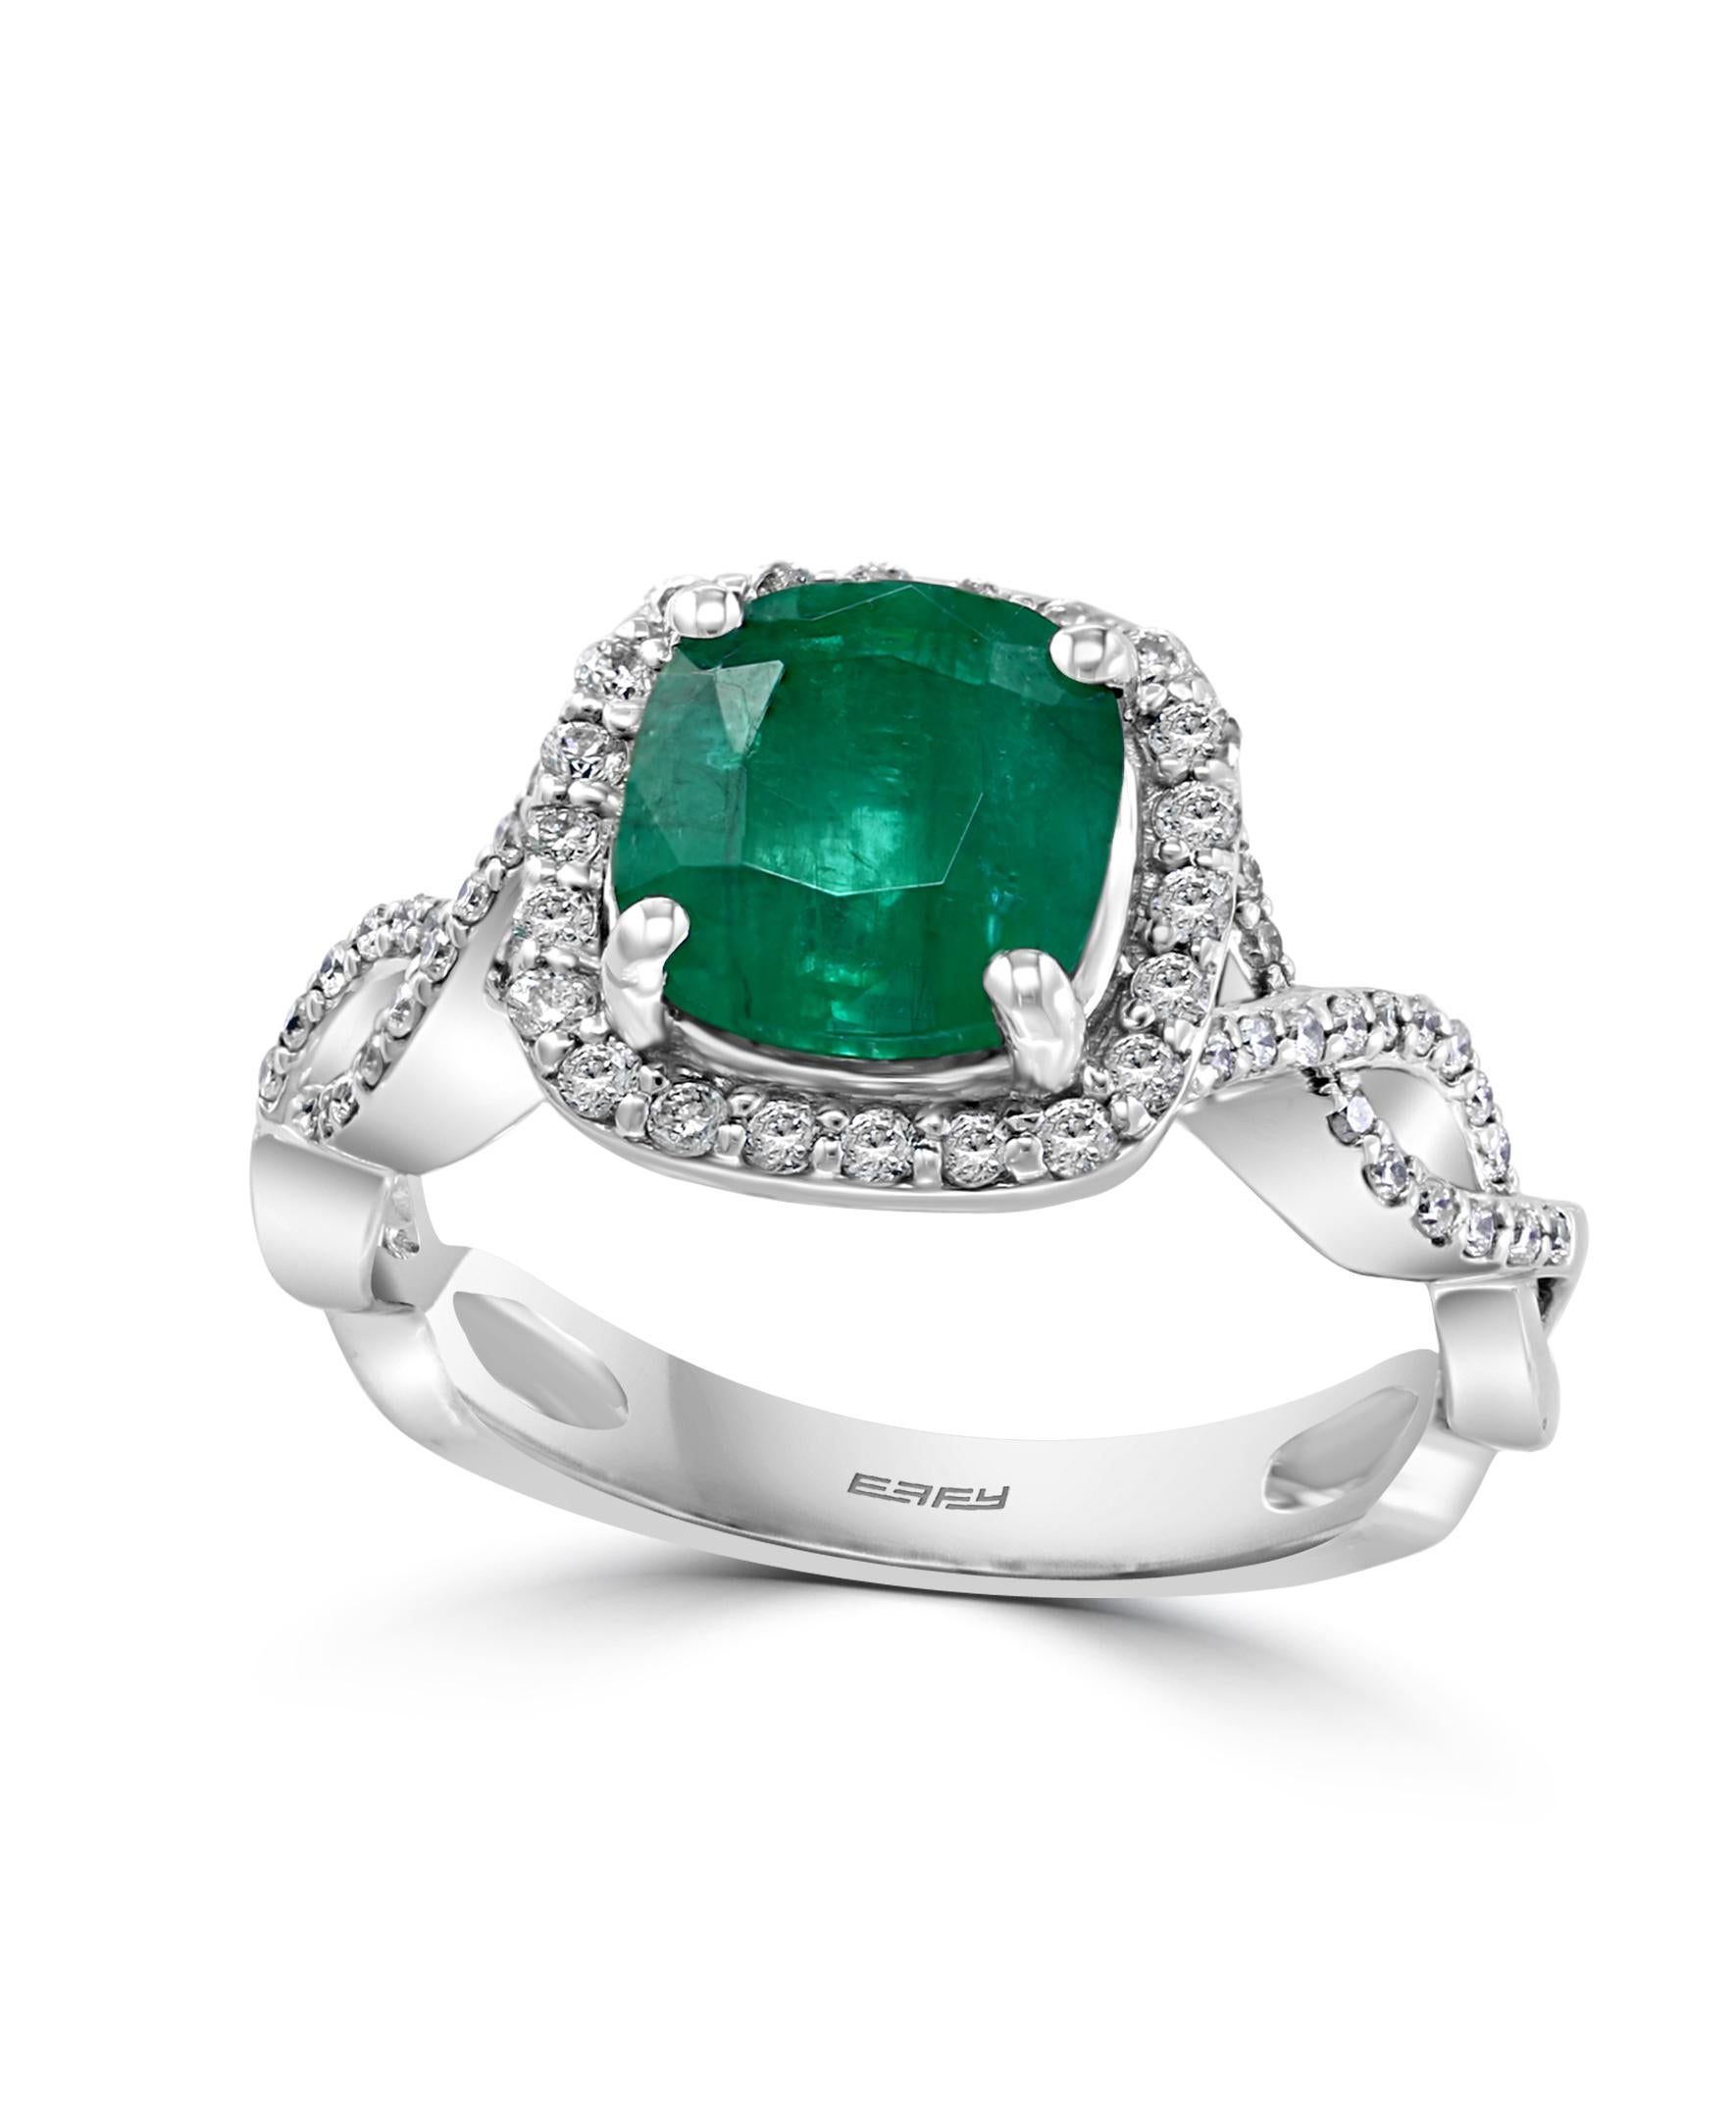 Round Cut Designer Effy's 1.8 Carat Emerald and Diamond Cocktail Ring 14 Karat White Gold